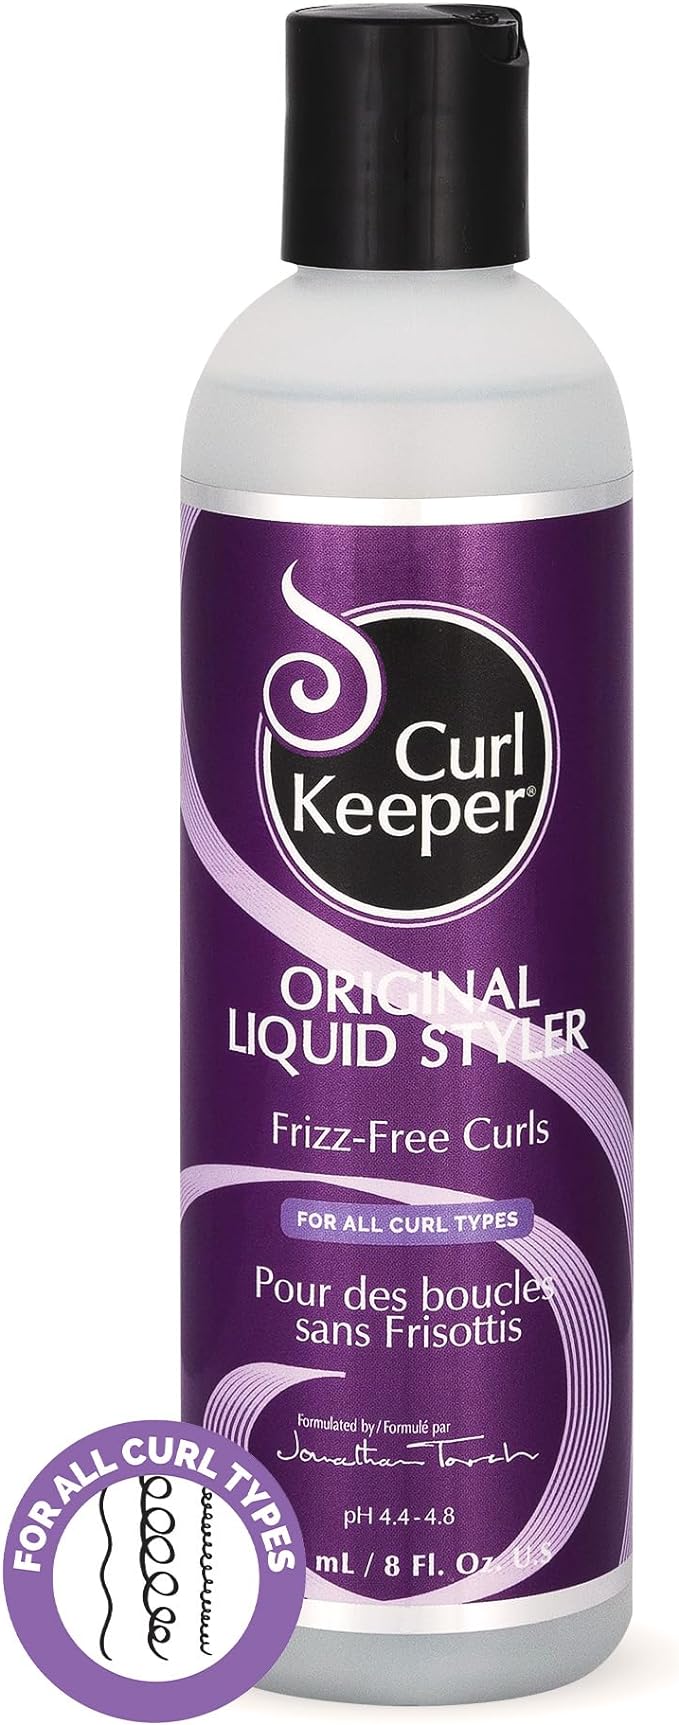 Curl Keeper Original